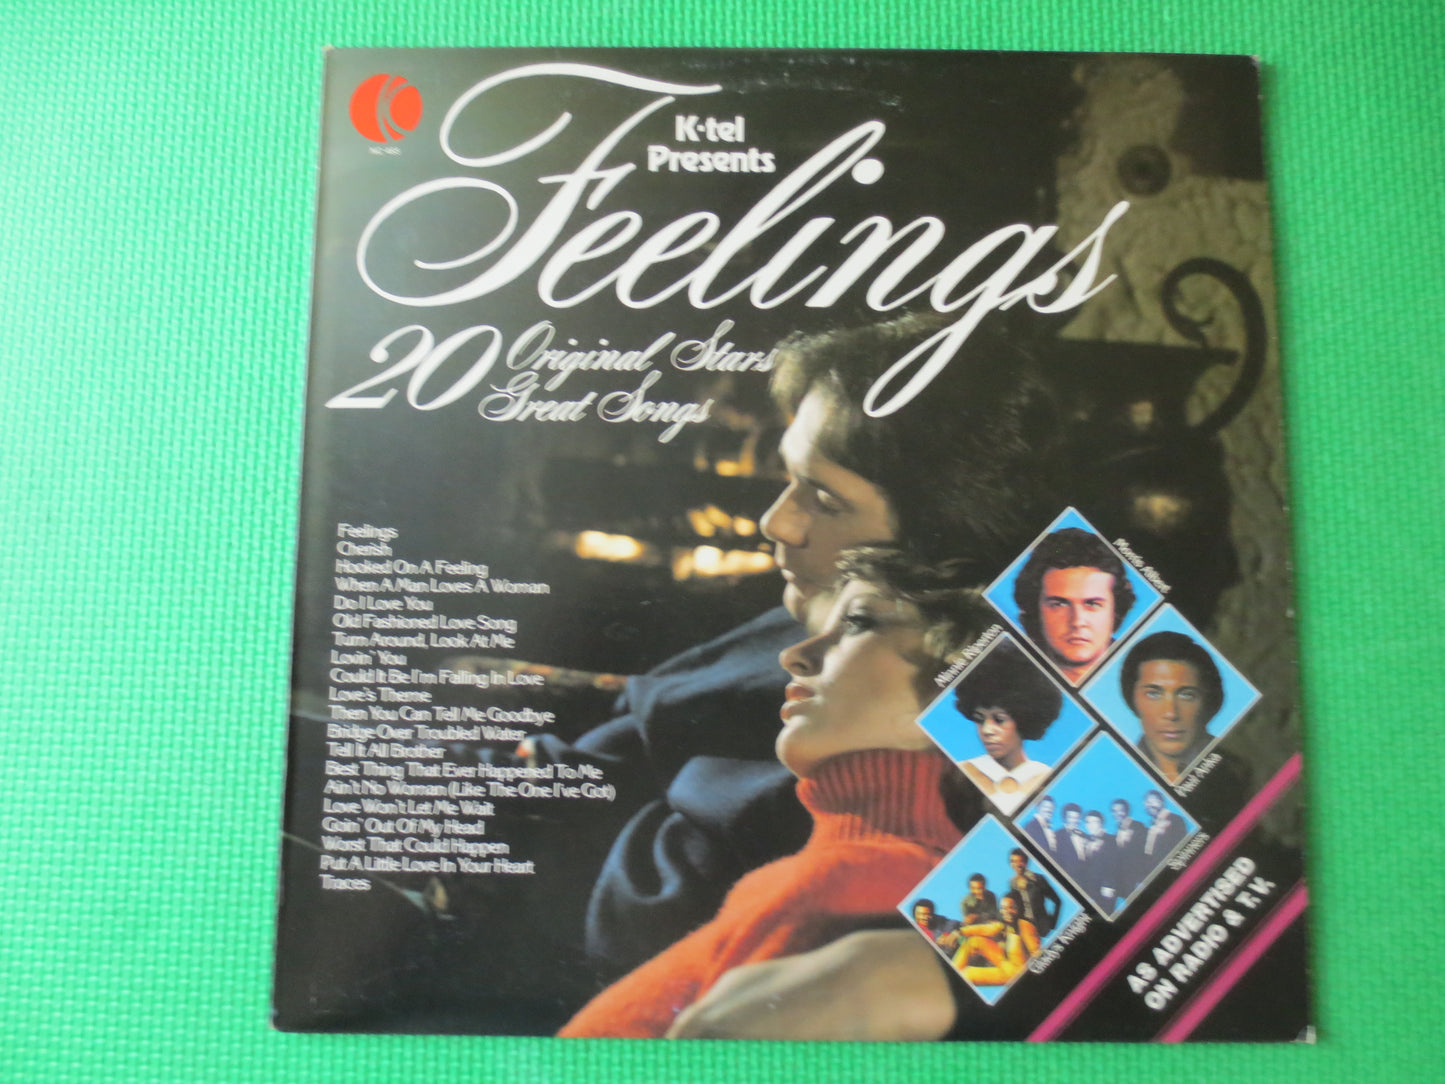 K-Tel RECORDS, FEELINGS, K-Tel Album, K-Tel Vinyl, K-Tel Lp, Love Songs, Pop Record, Pop Vinyl, Vintage Vinyl, 1977 Records